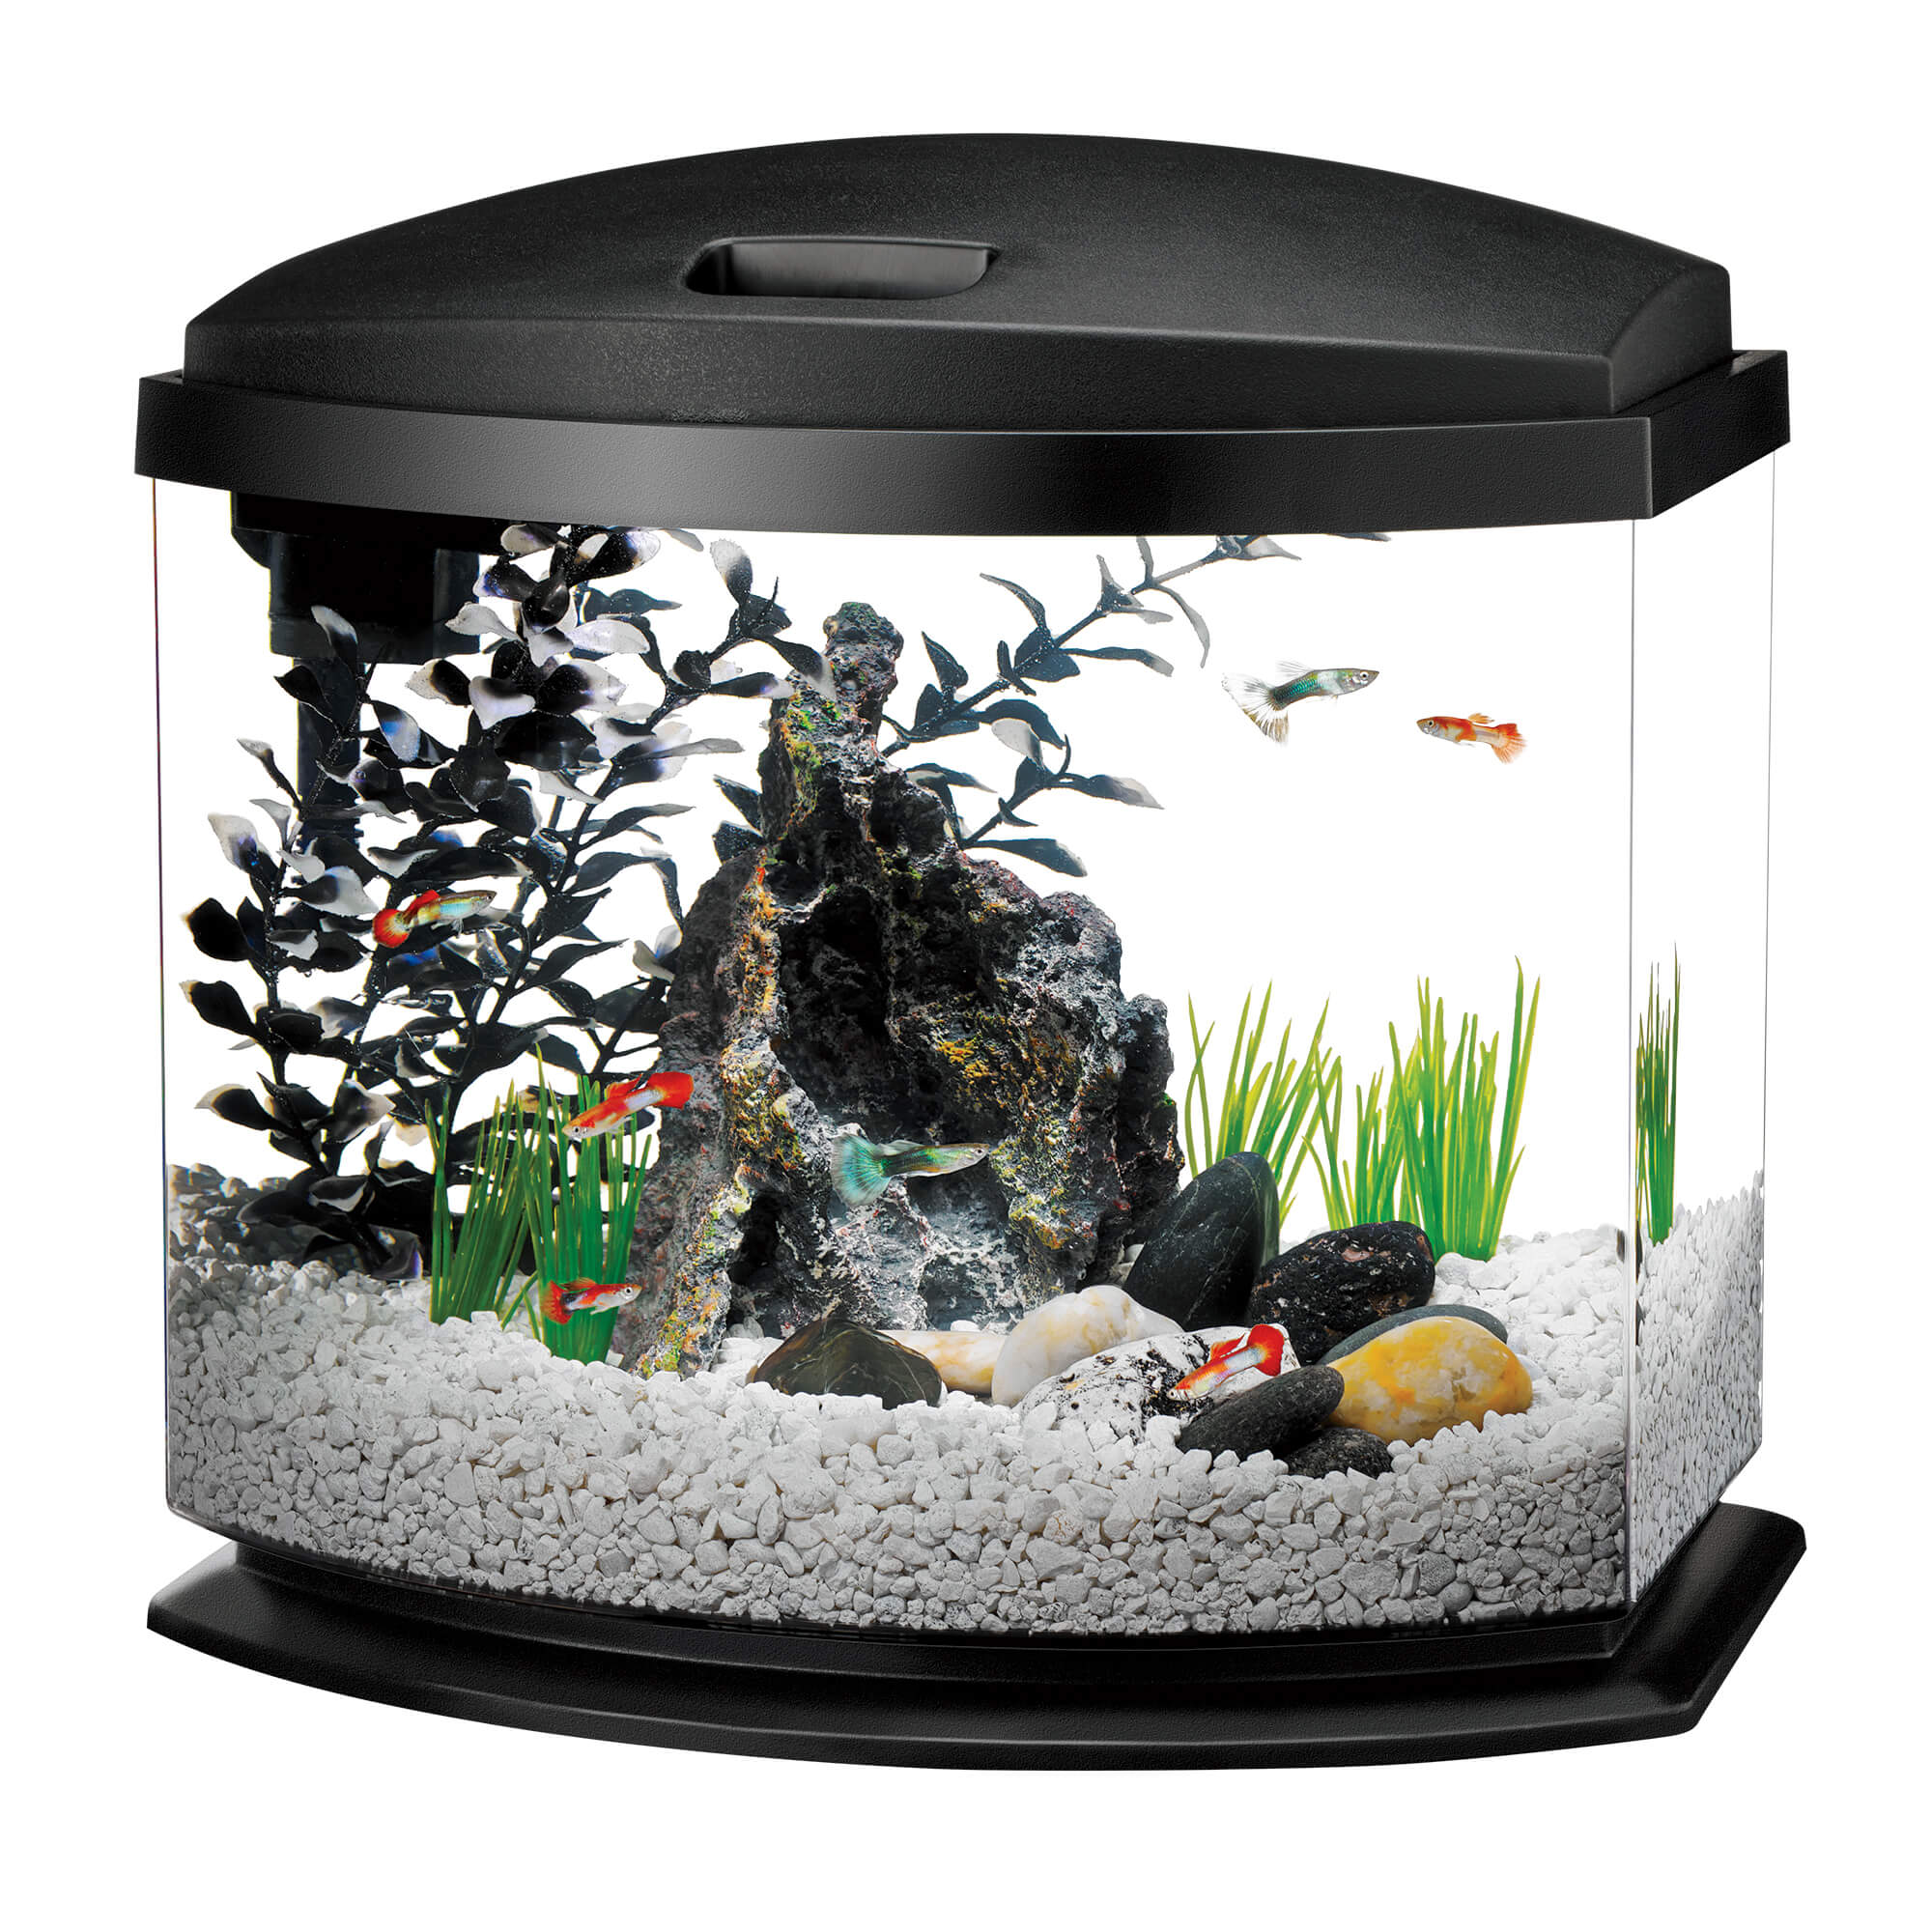 Aqueon 5 Gallon Minibow Led Desktop Fish Aquarium Kit Black Petco